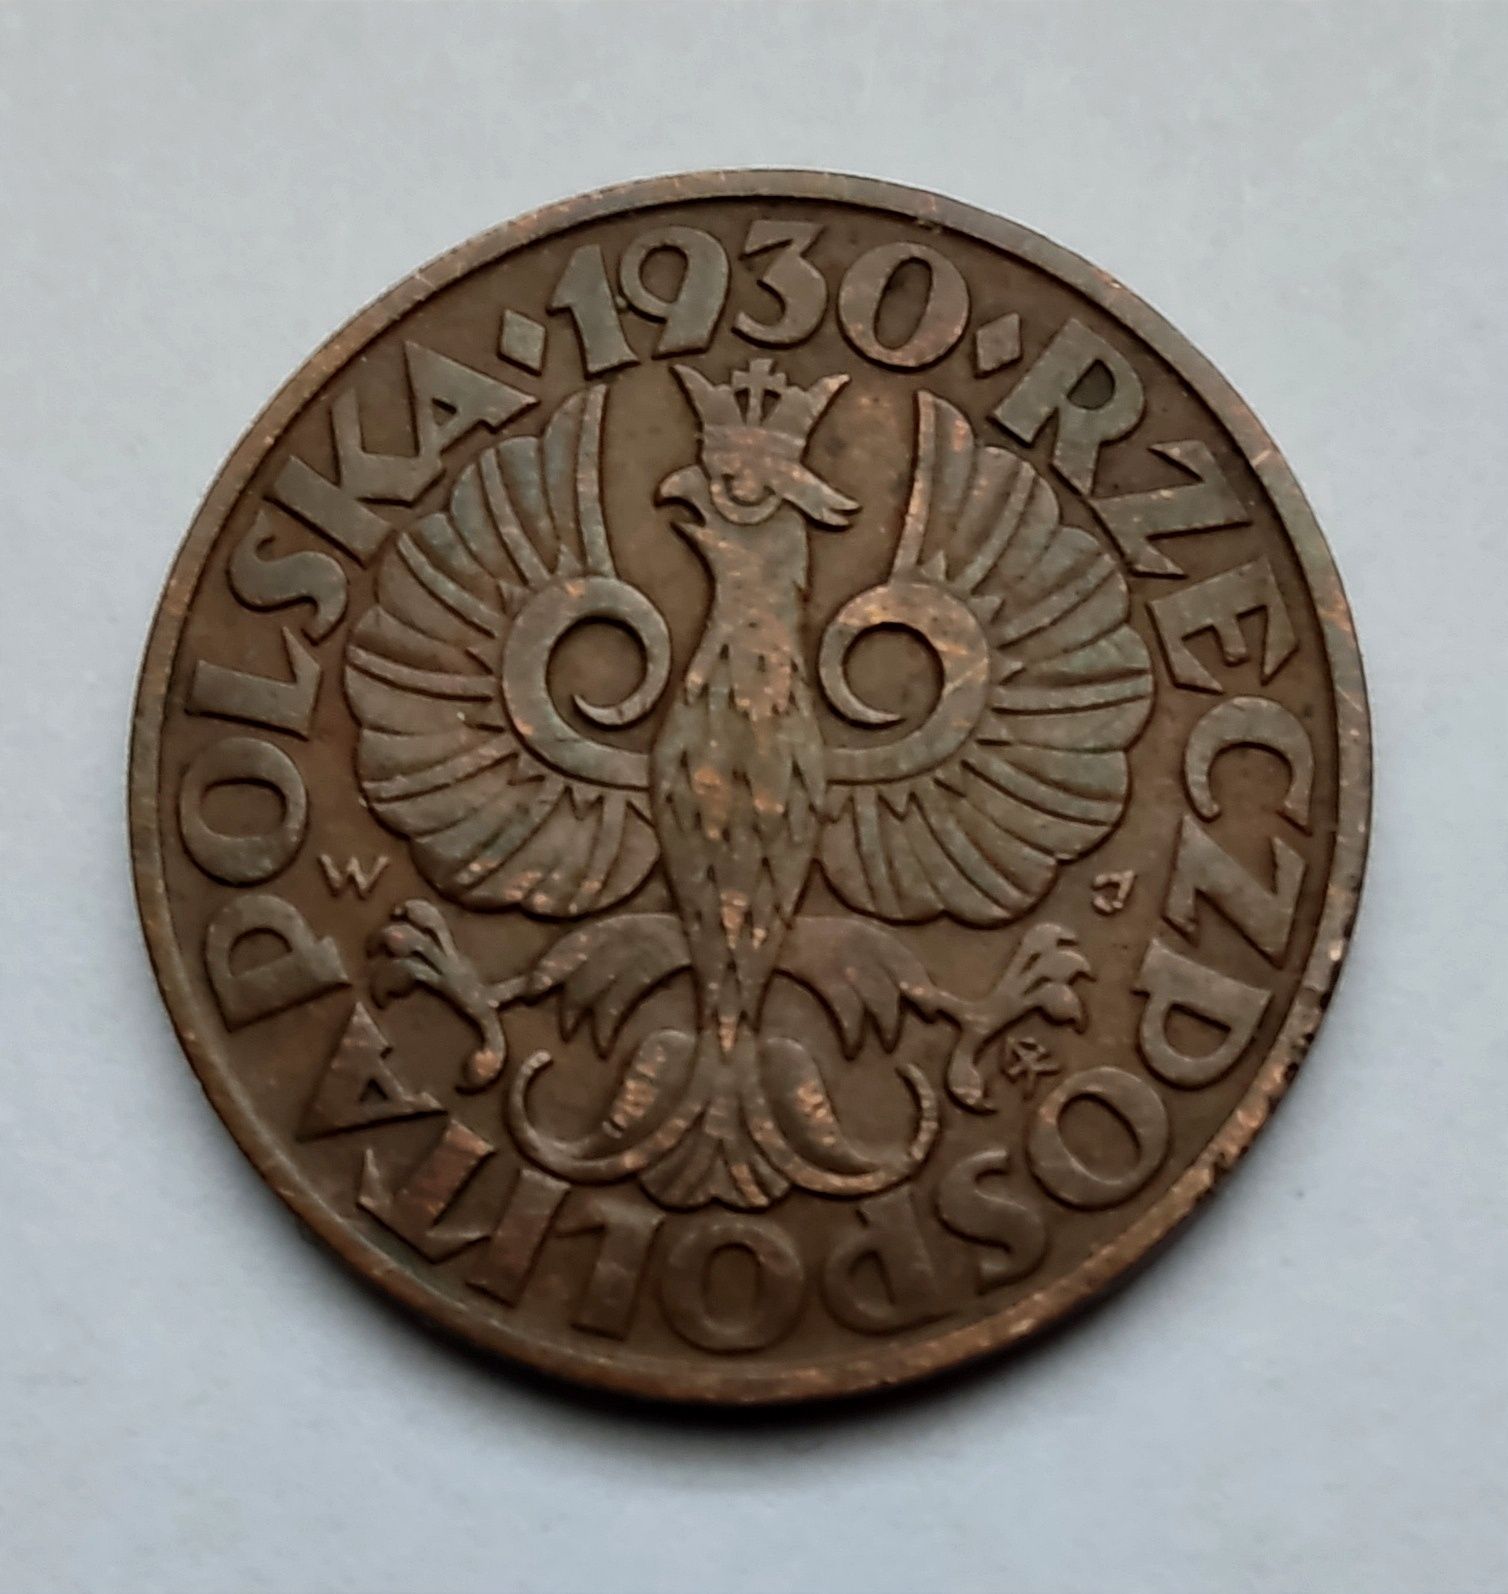 Moneta 5 groszy 1930 r.